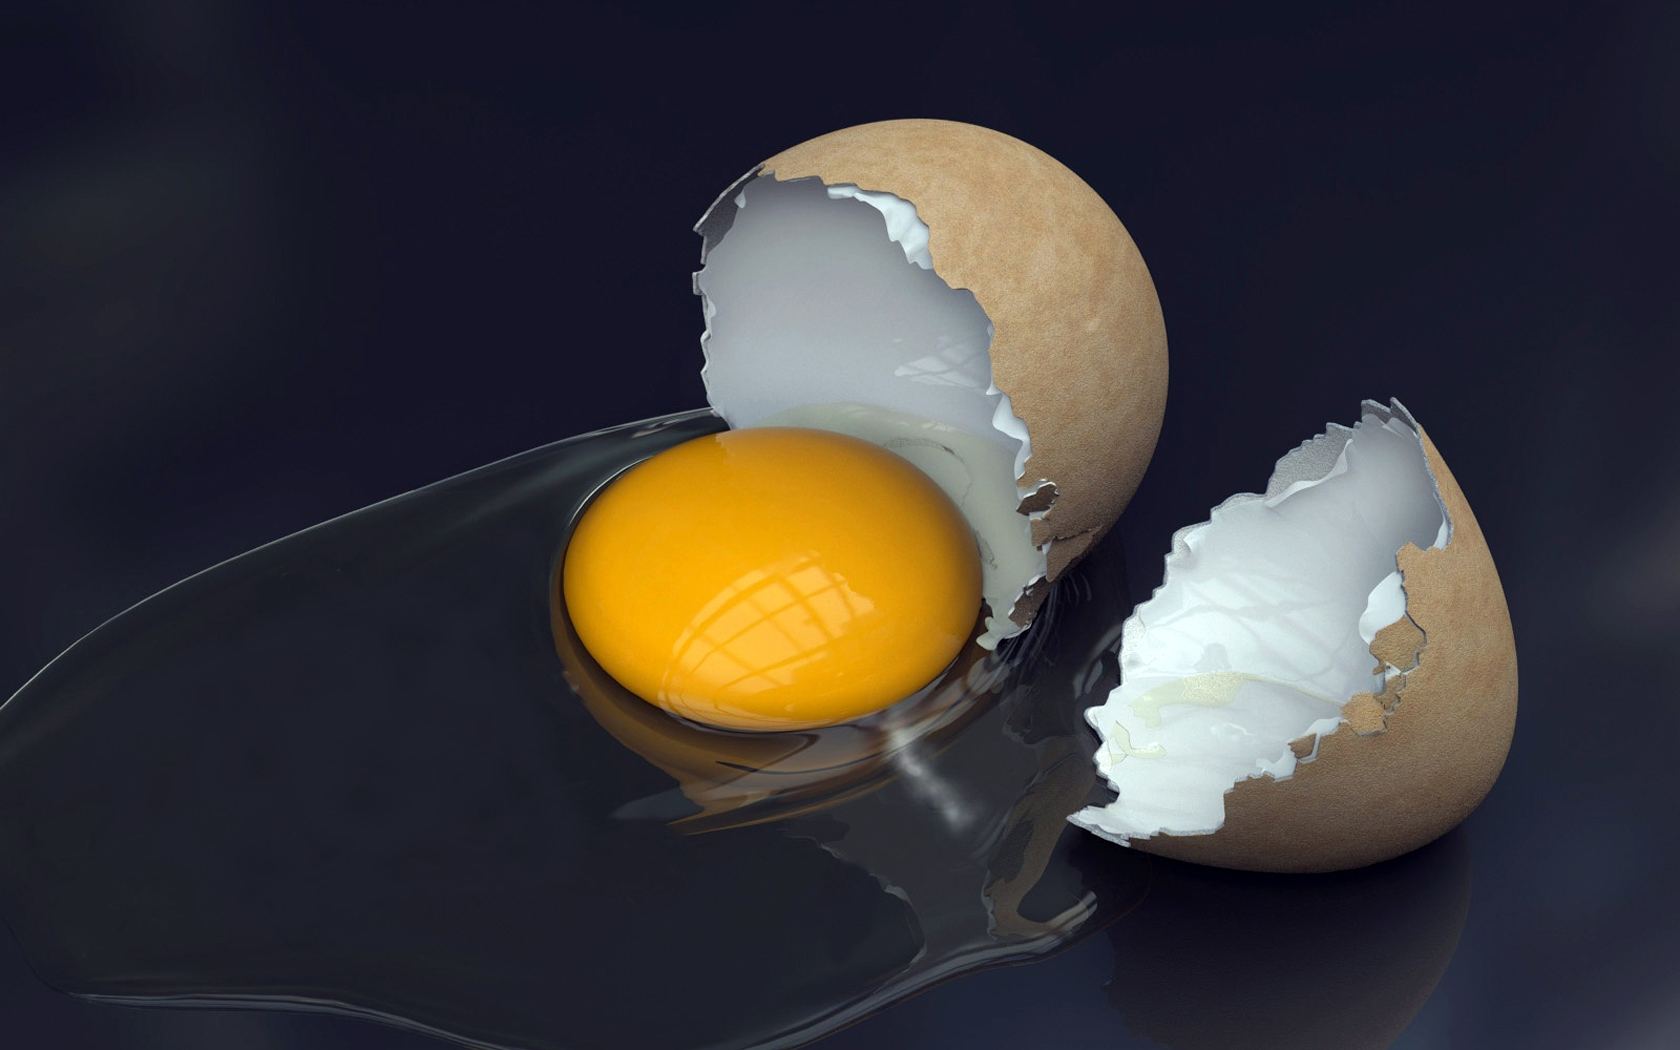 Egg Broken